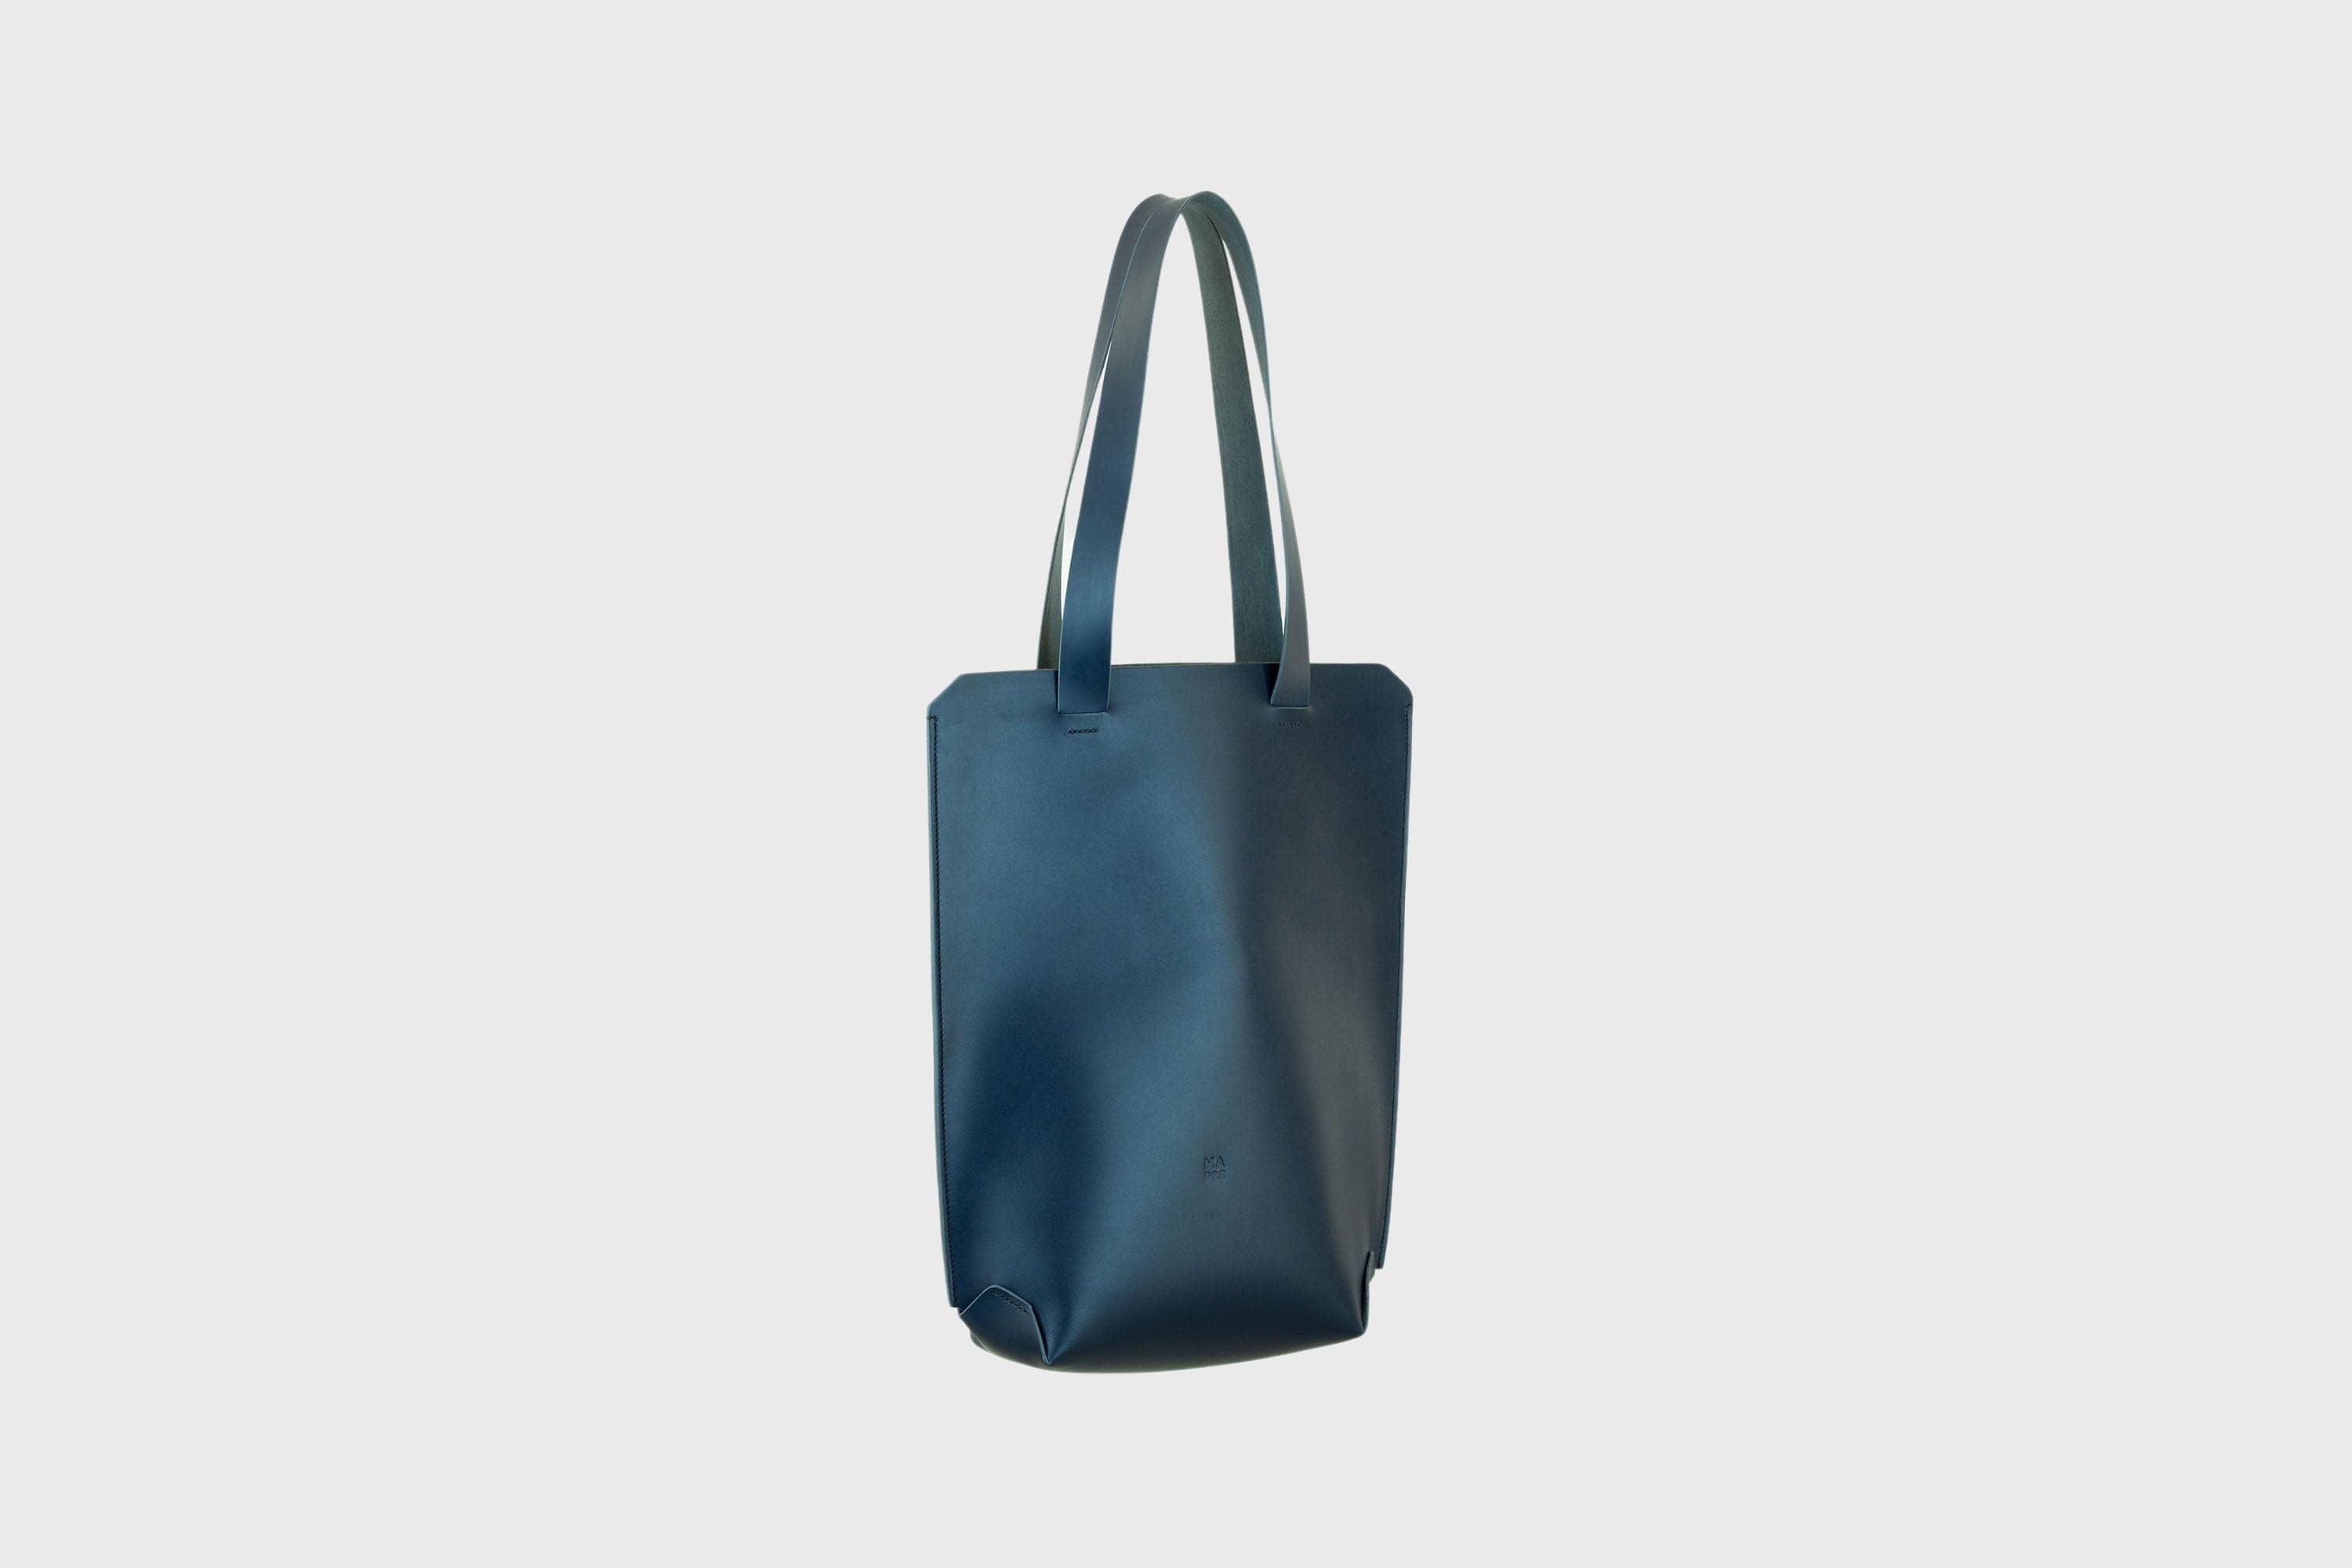 Carry Bag Long Leather Dark Blue Vachetta Handmade Real Leather Design By Manuel Dreesmann Atelier Madre Barcelona Spain